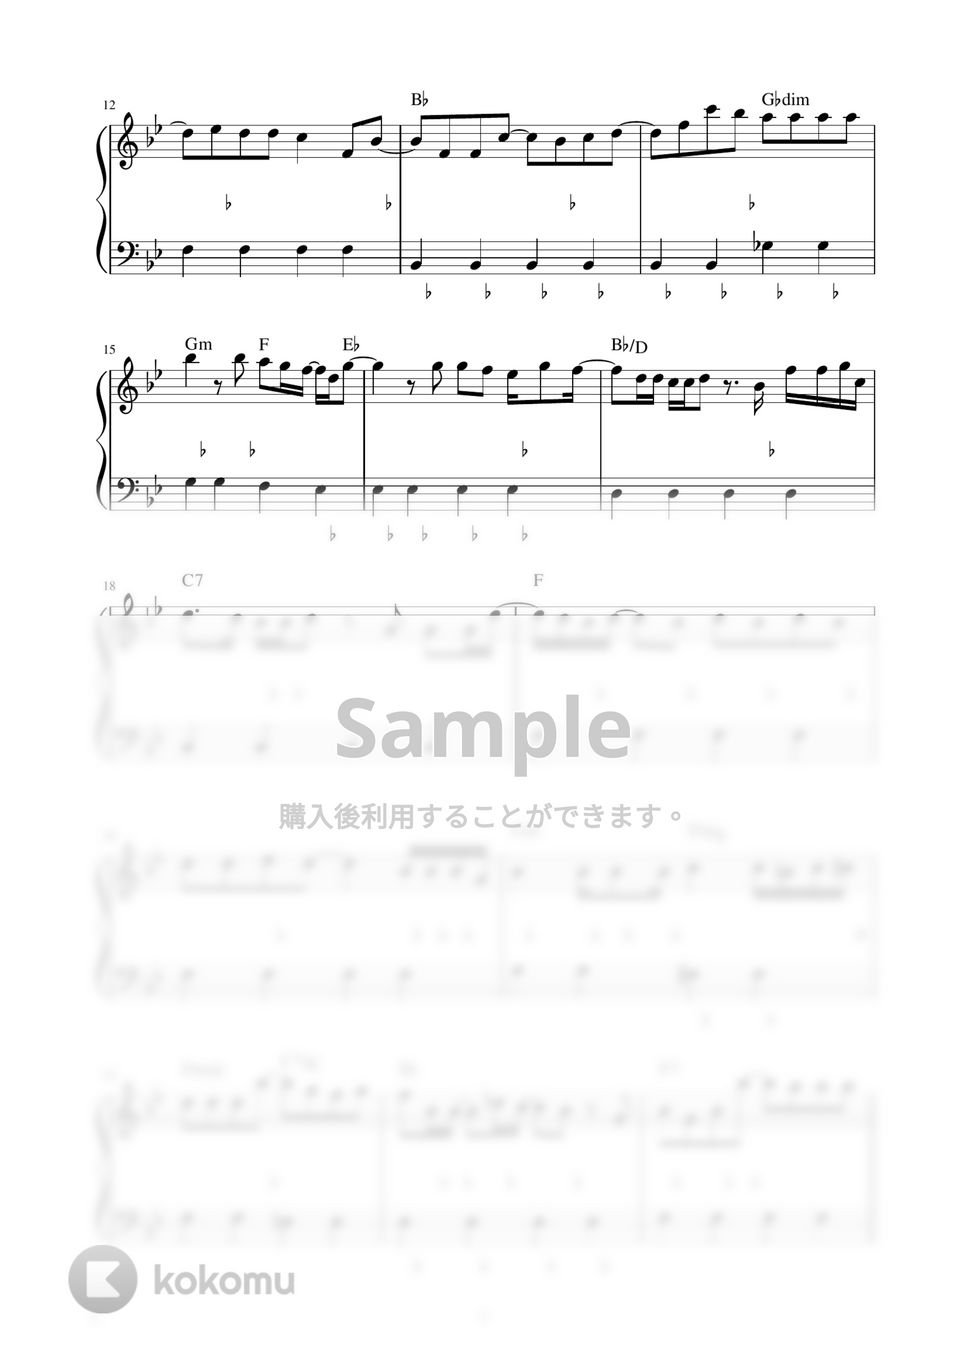 King Gnu - 雨燦々 (ピアノ楽譜 / かんたん両手 / 歌詞付き / ドレミ付き / 初心者向き) by piano.tokyo